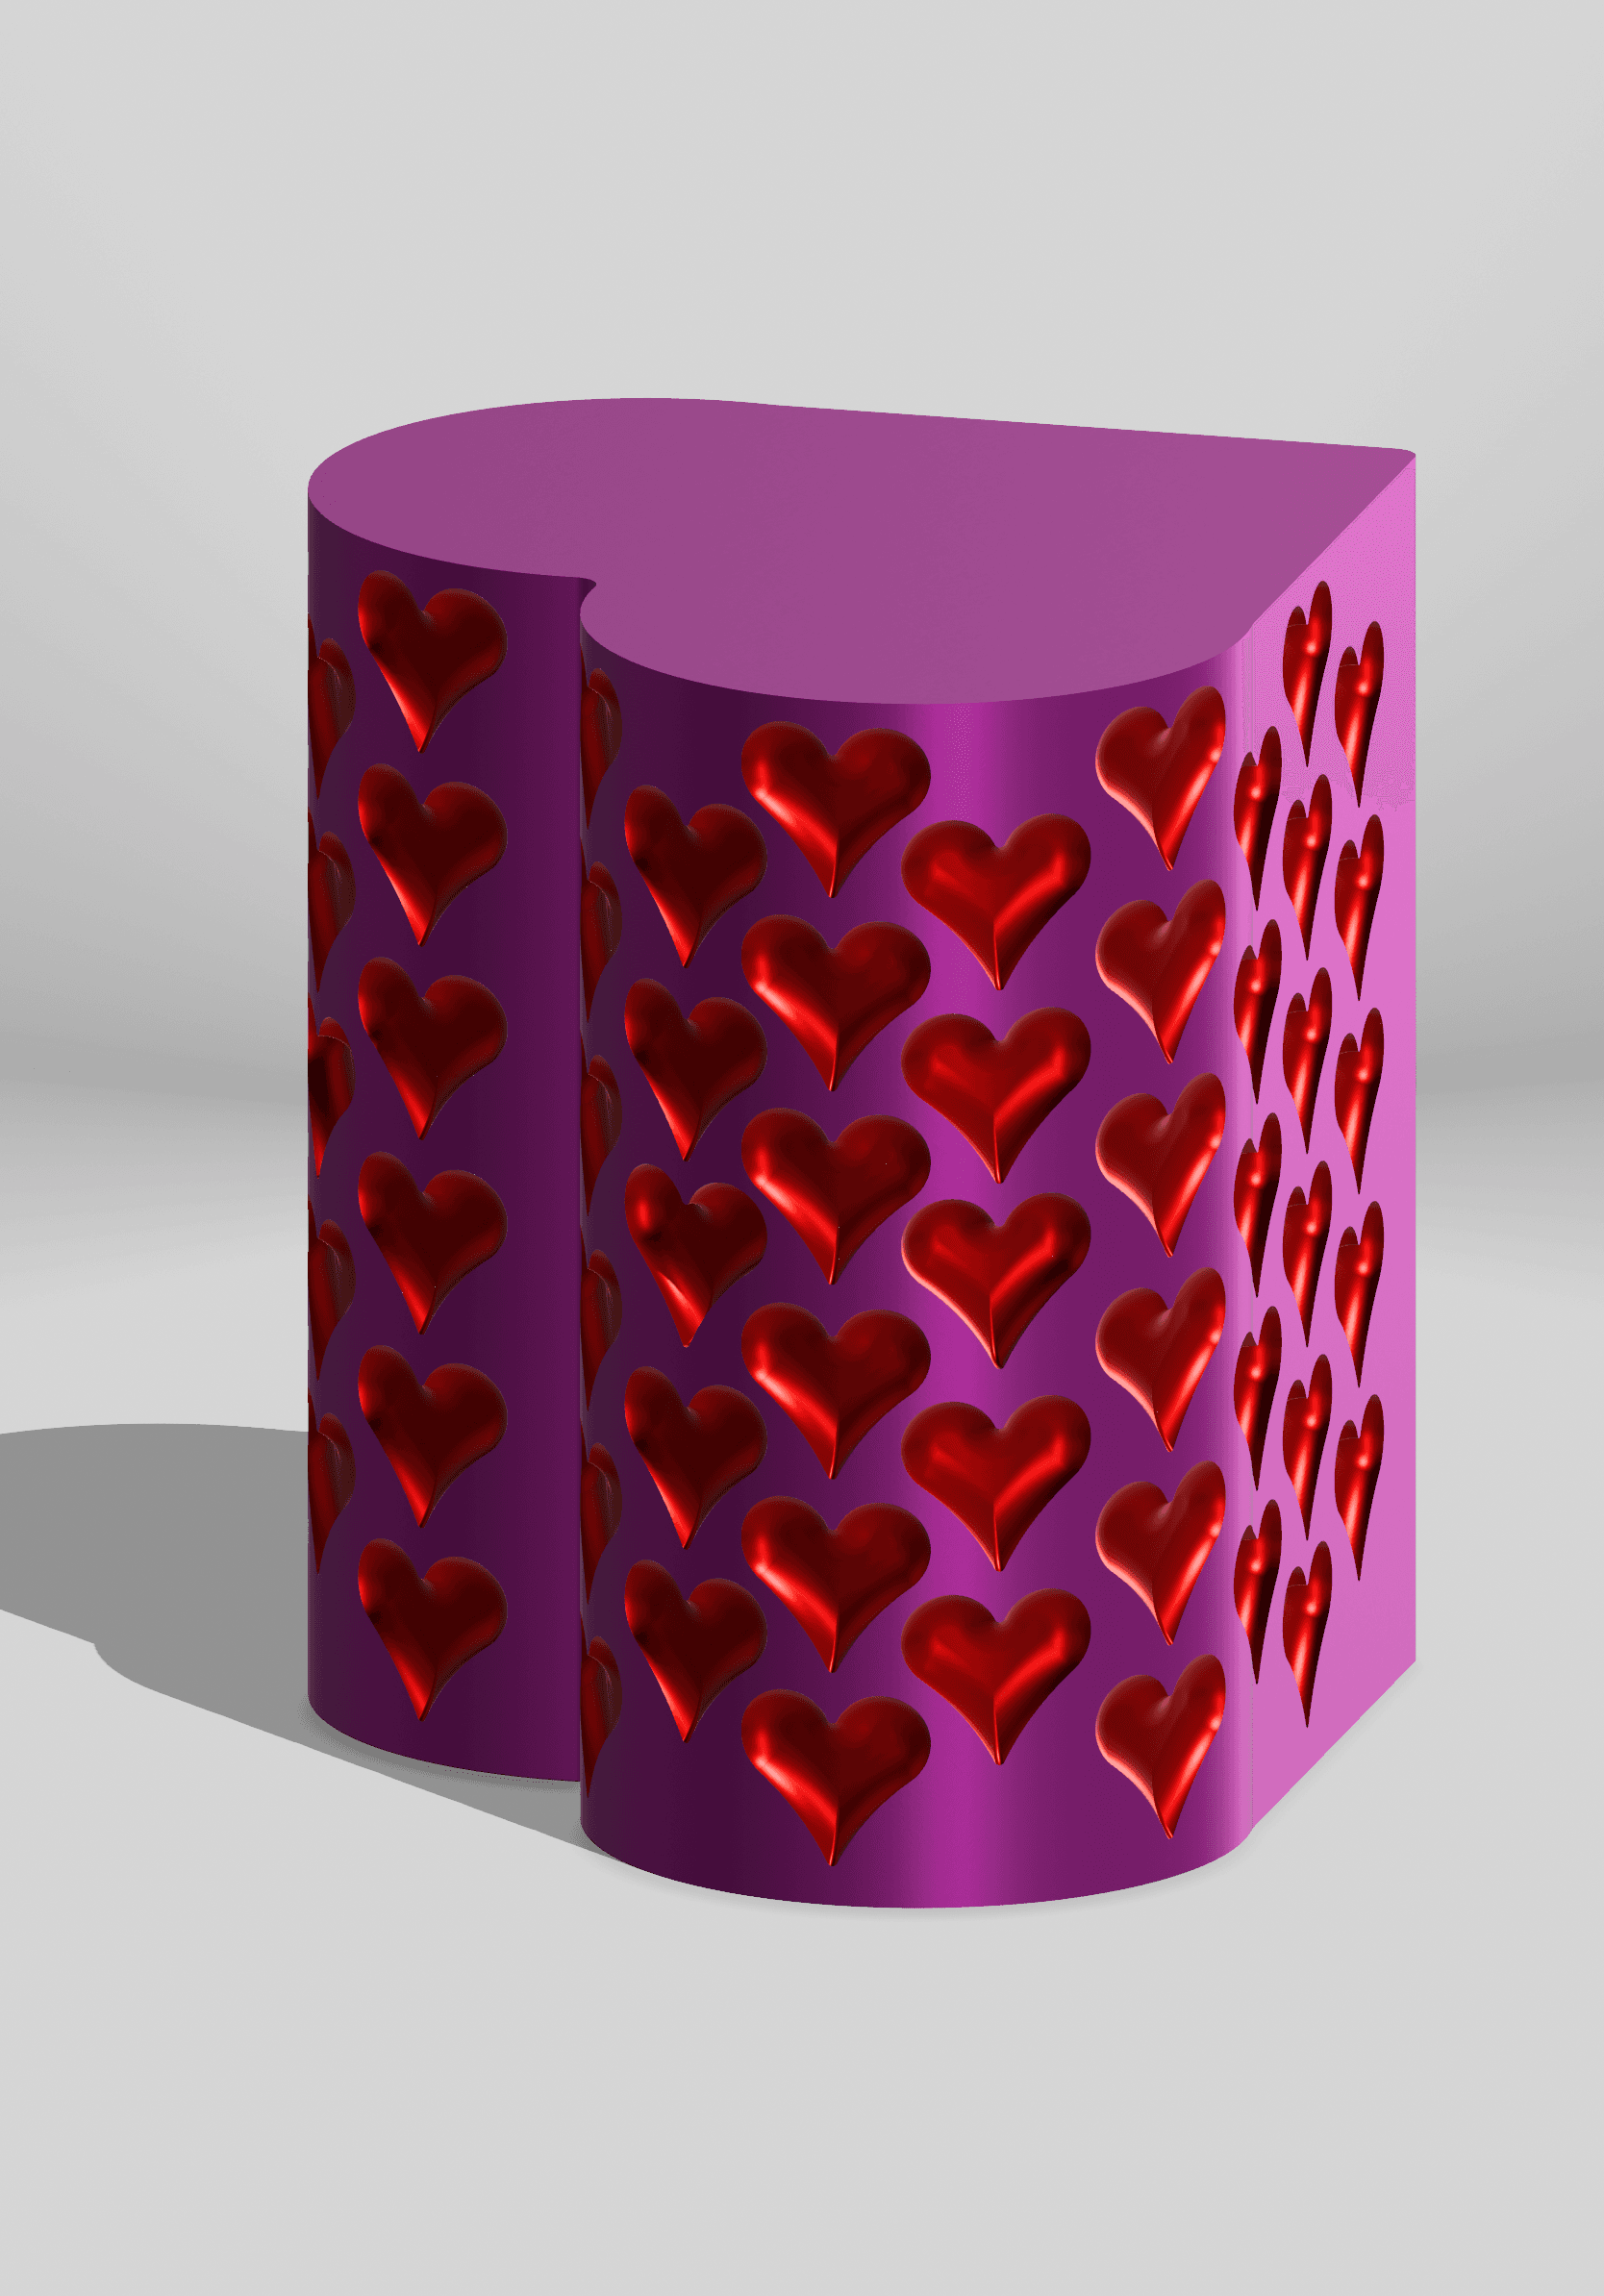 Heart of hearts  hollow 3d model